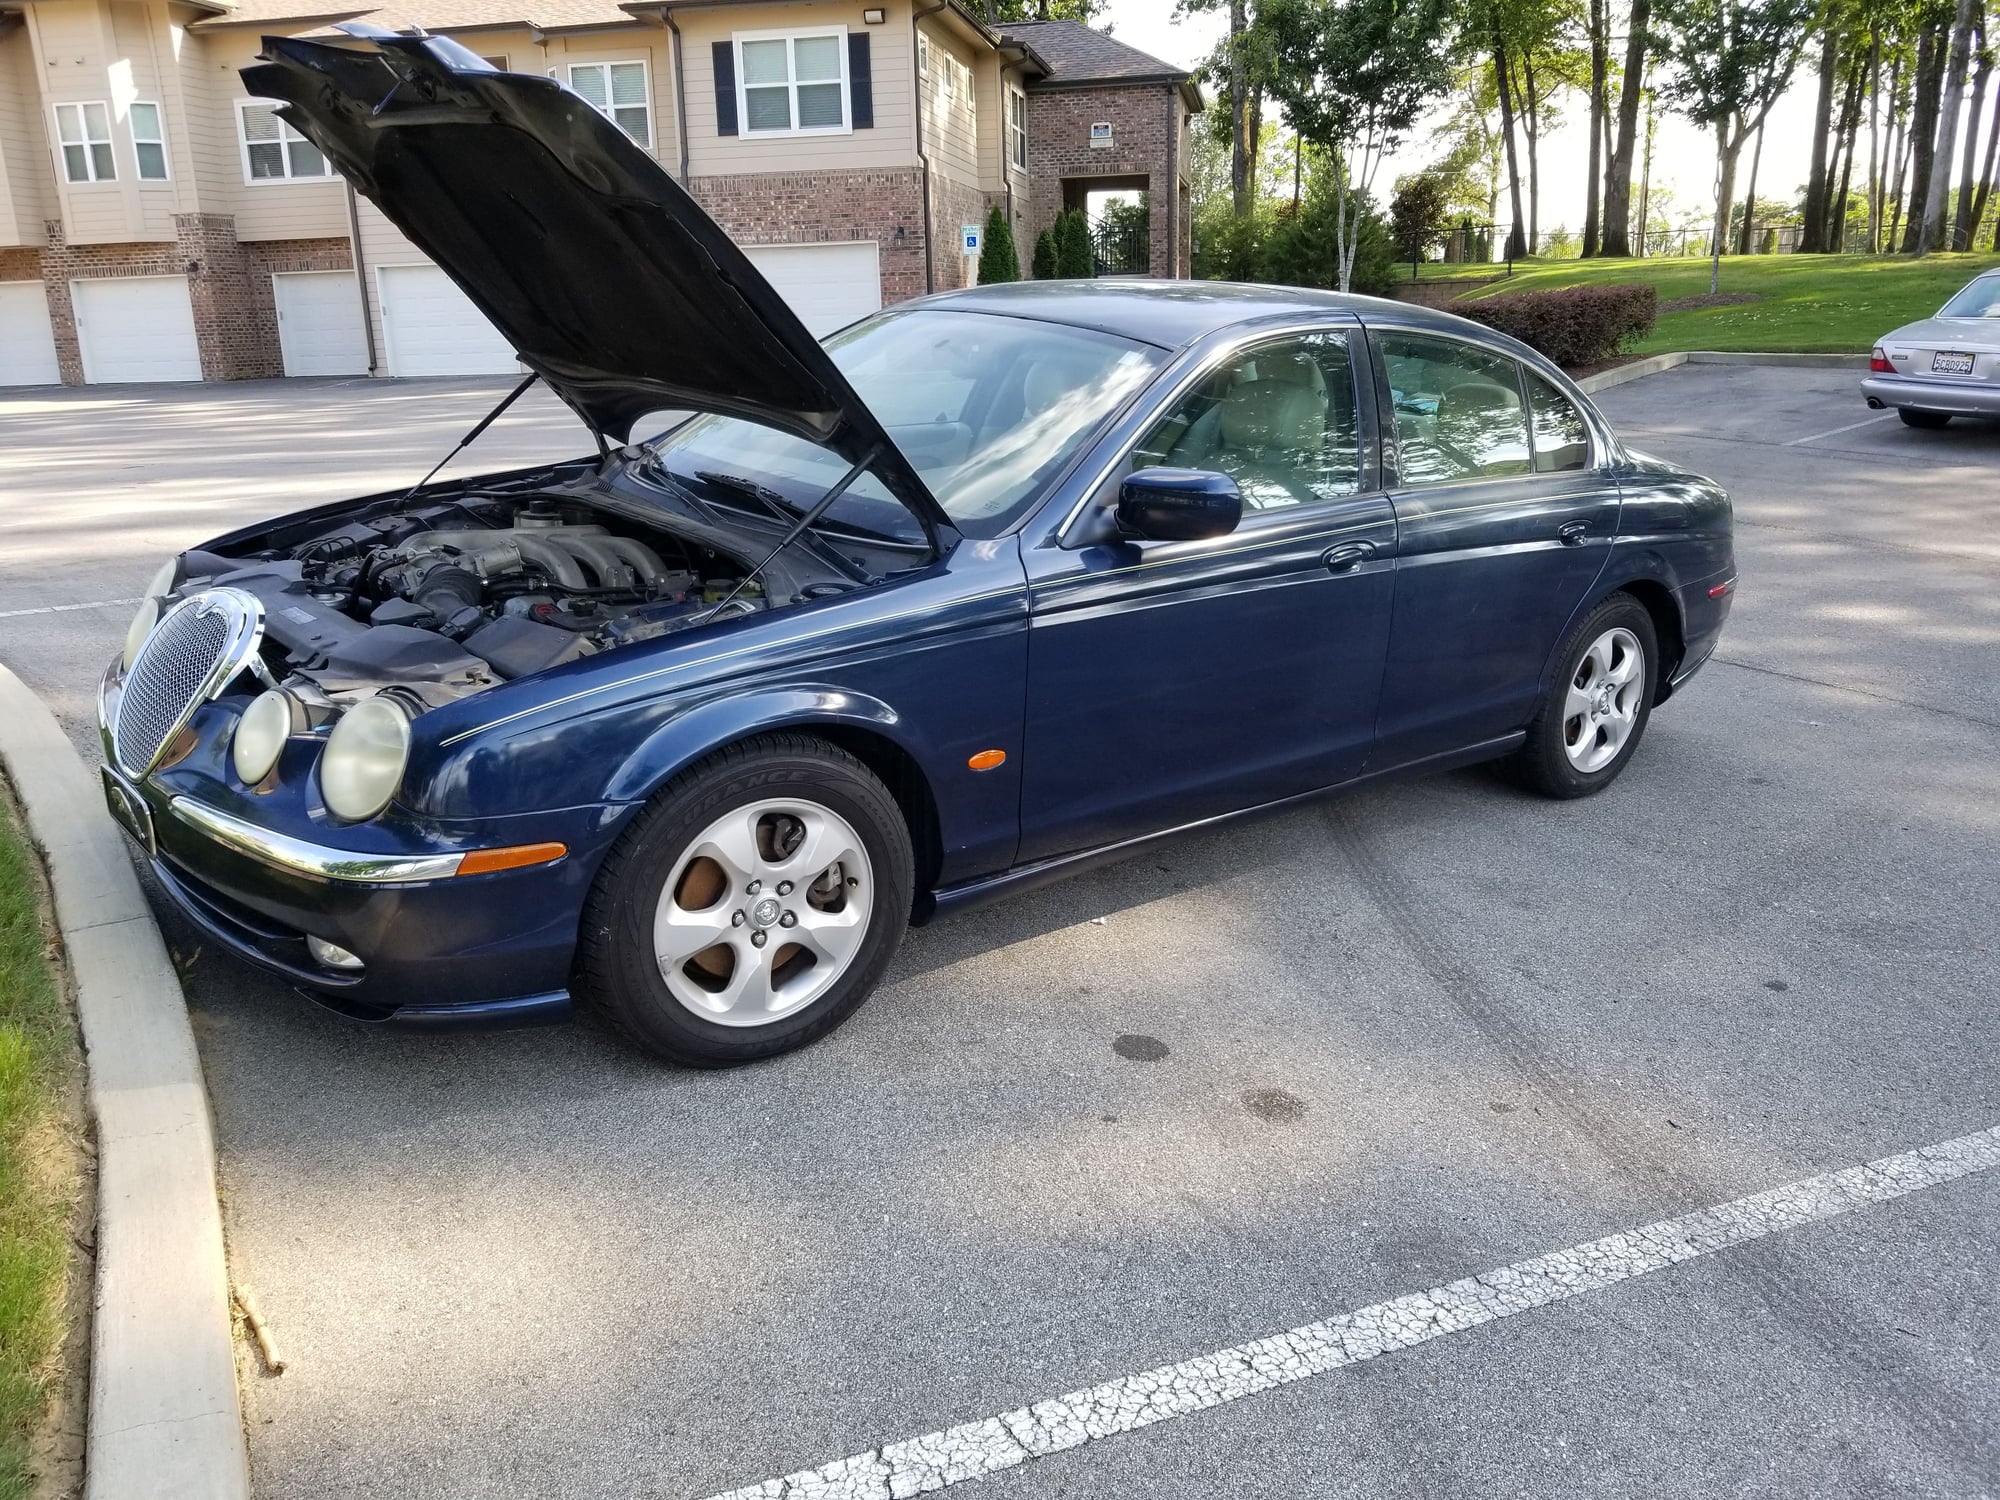 2001 Jaguar S-Type - All Parts Available - Miscellaneous - $0 - Memphis, TN 38119, United States